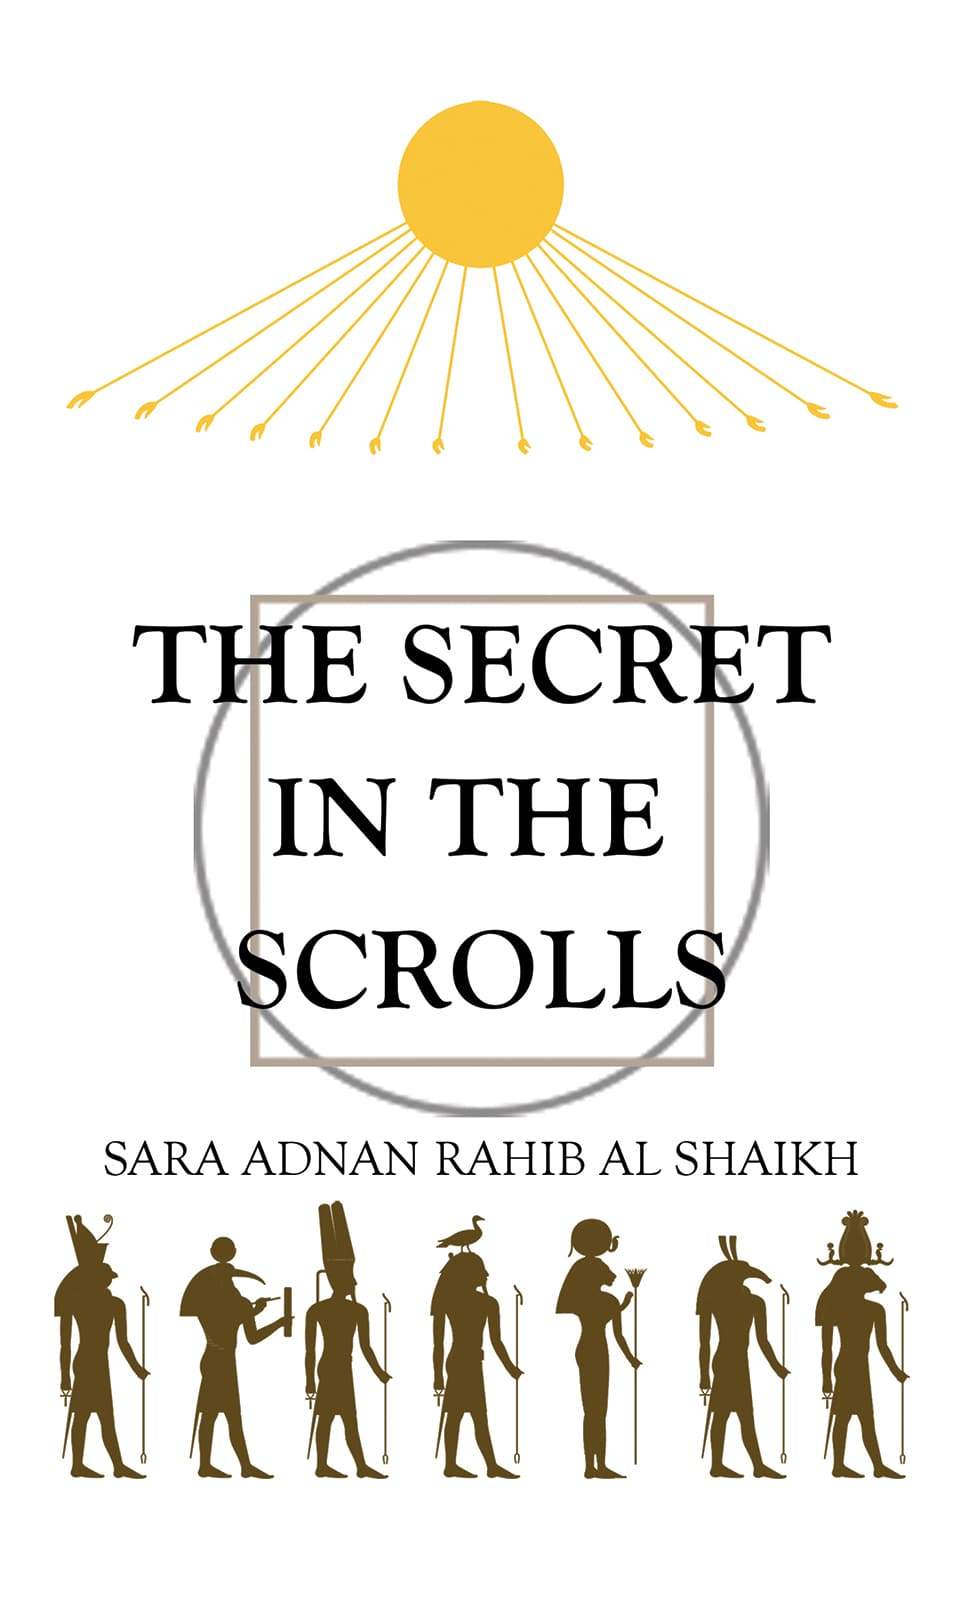 The Secret in The Scrolls